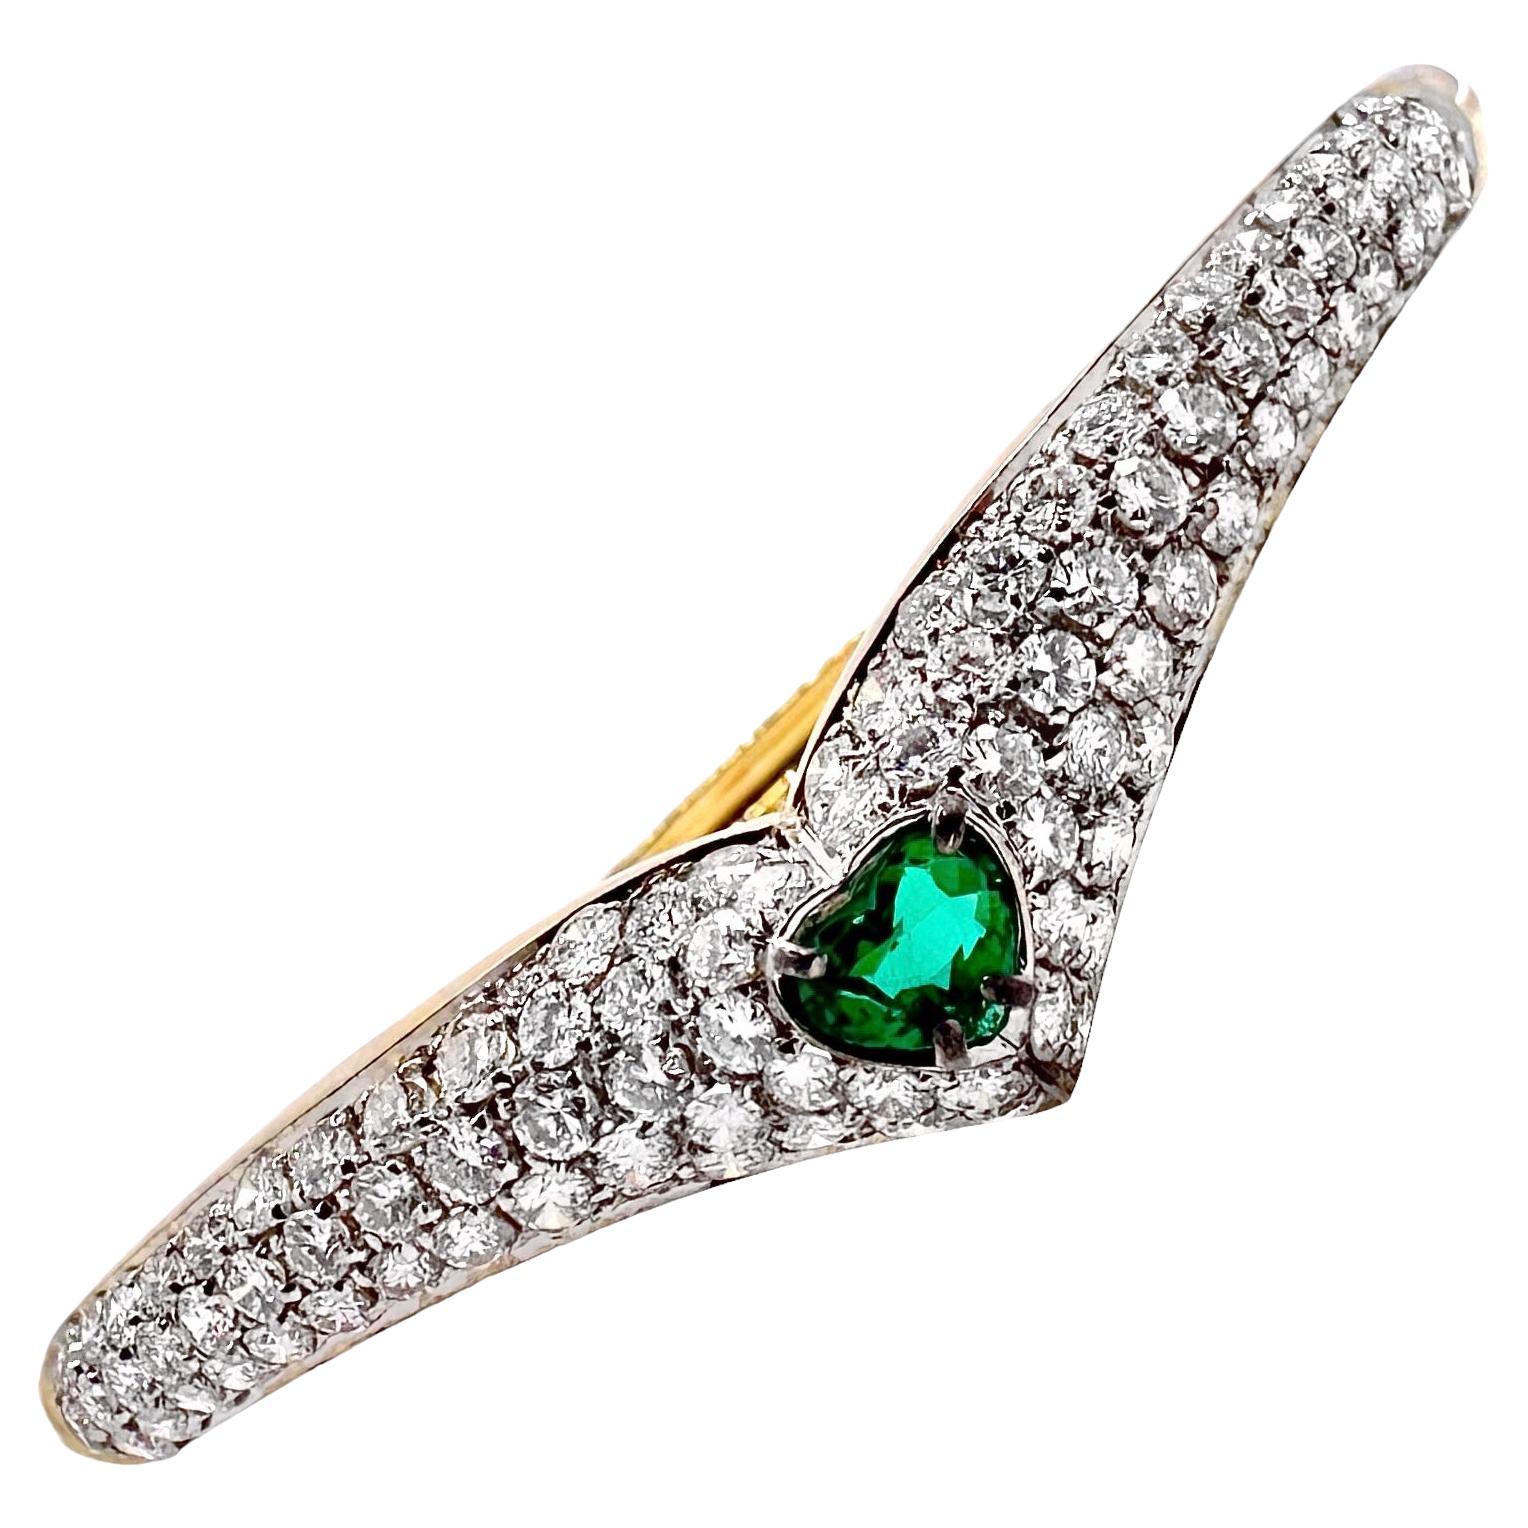  Stylish 18k Gold Bangle Bracelet with Heart Shaped Emerald and Diamonds For Sale